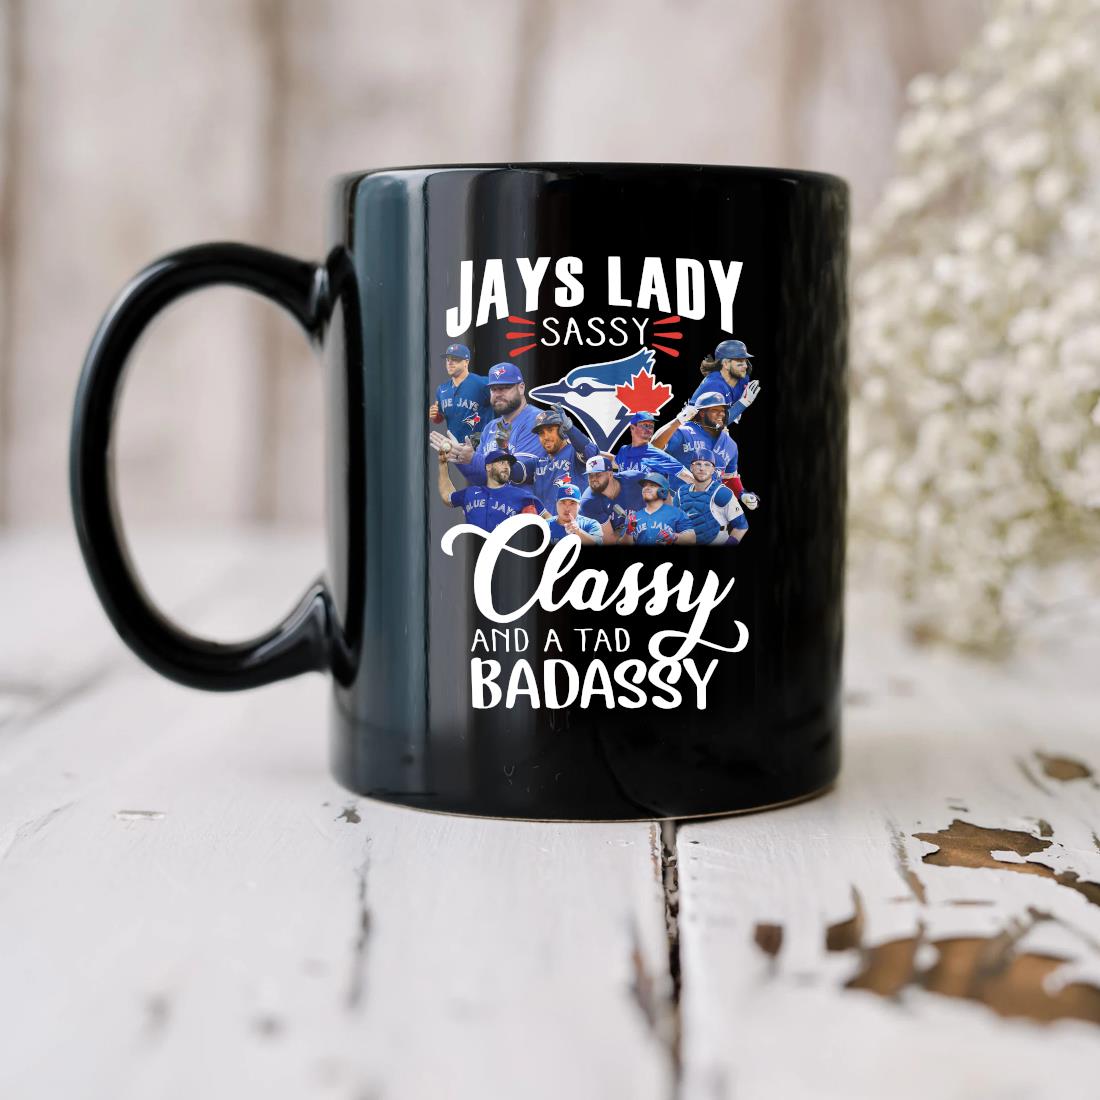 Original Toronto Blue Jays Lady Sassy Classy And A Tad Badassy Mug biu